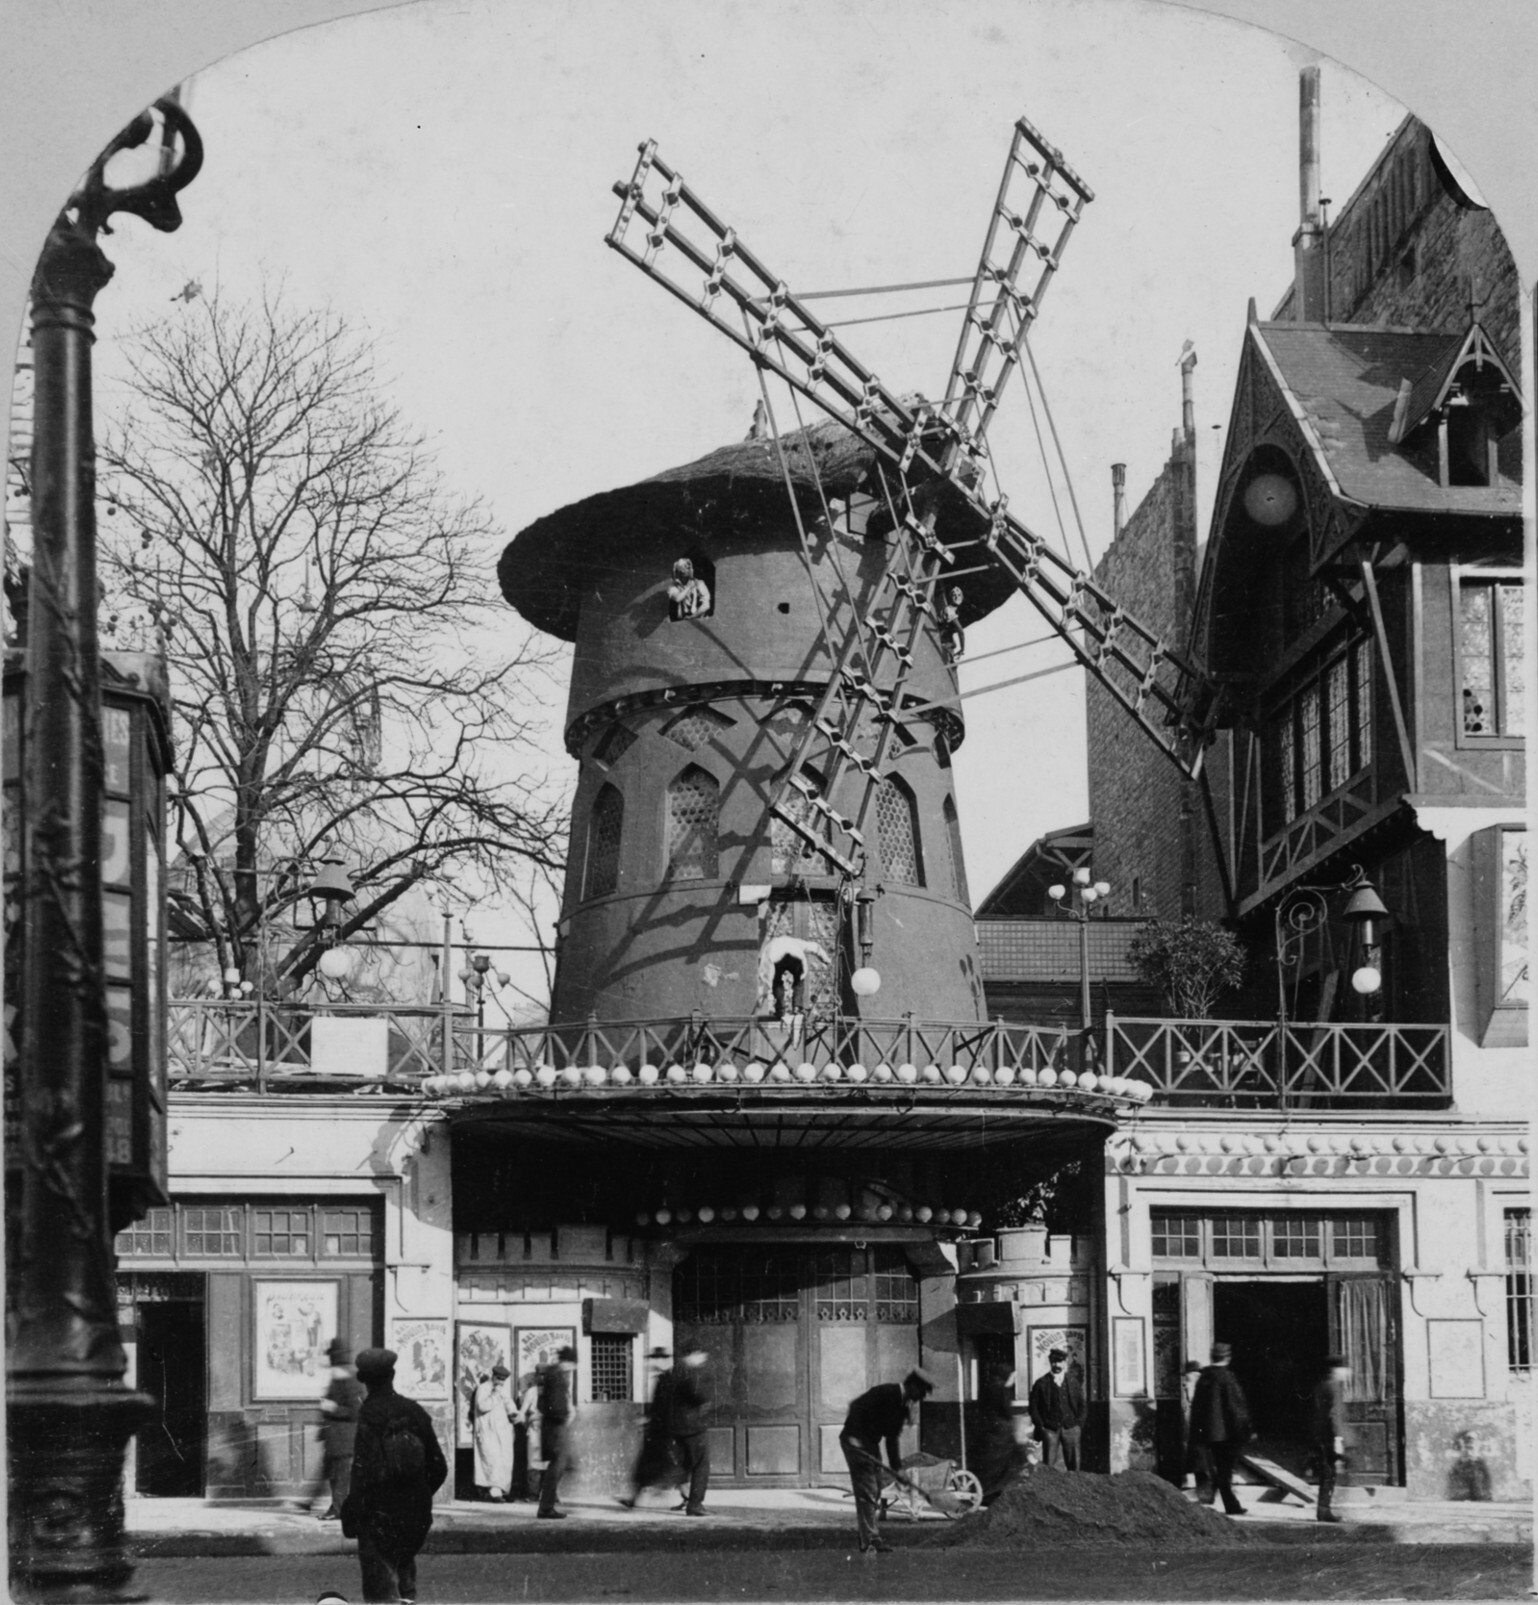 Мулен Руж, Париж, 1900. Фотограф Карлтон Харлоу Грейвс